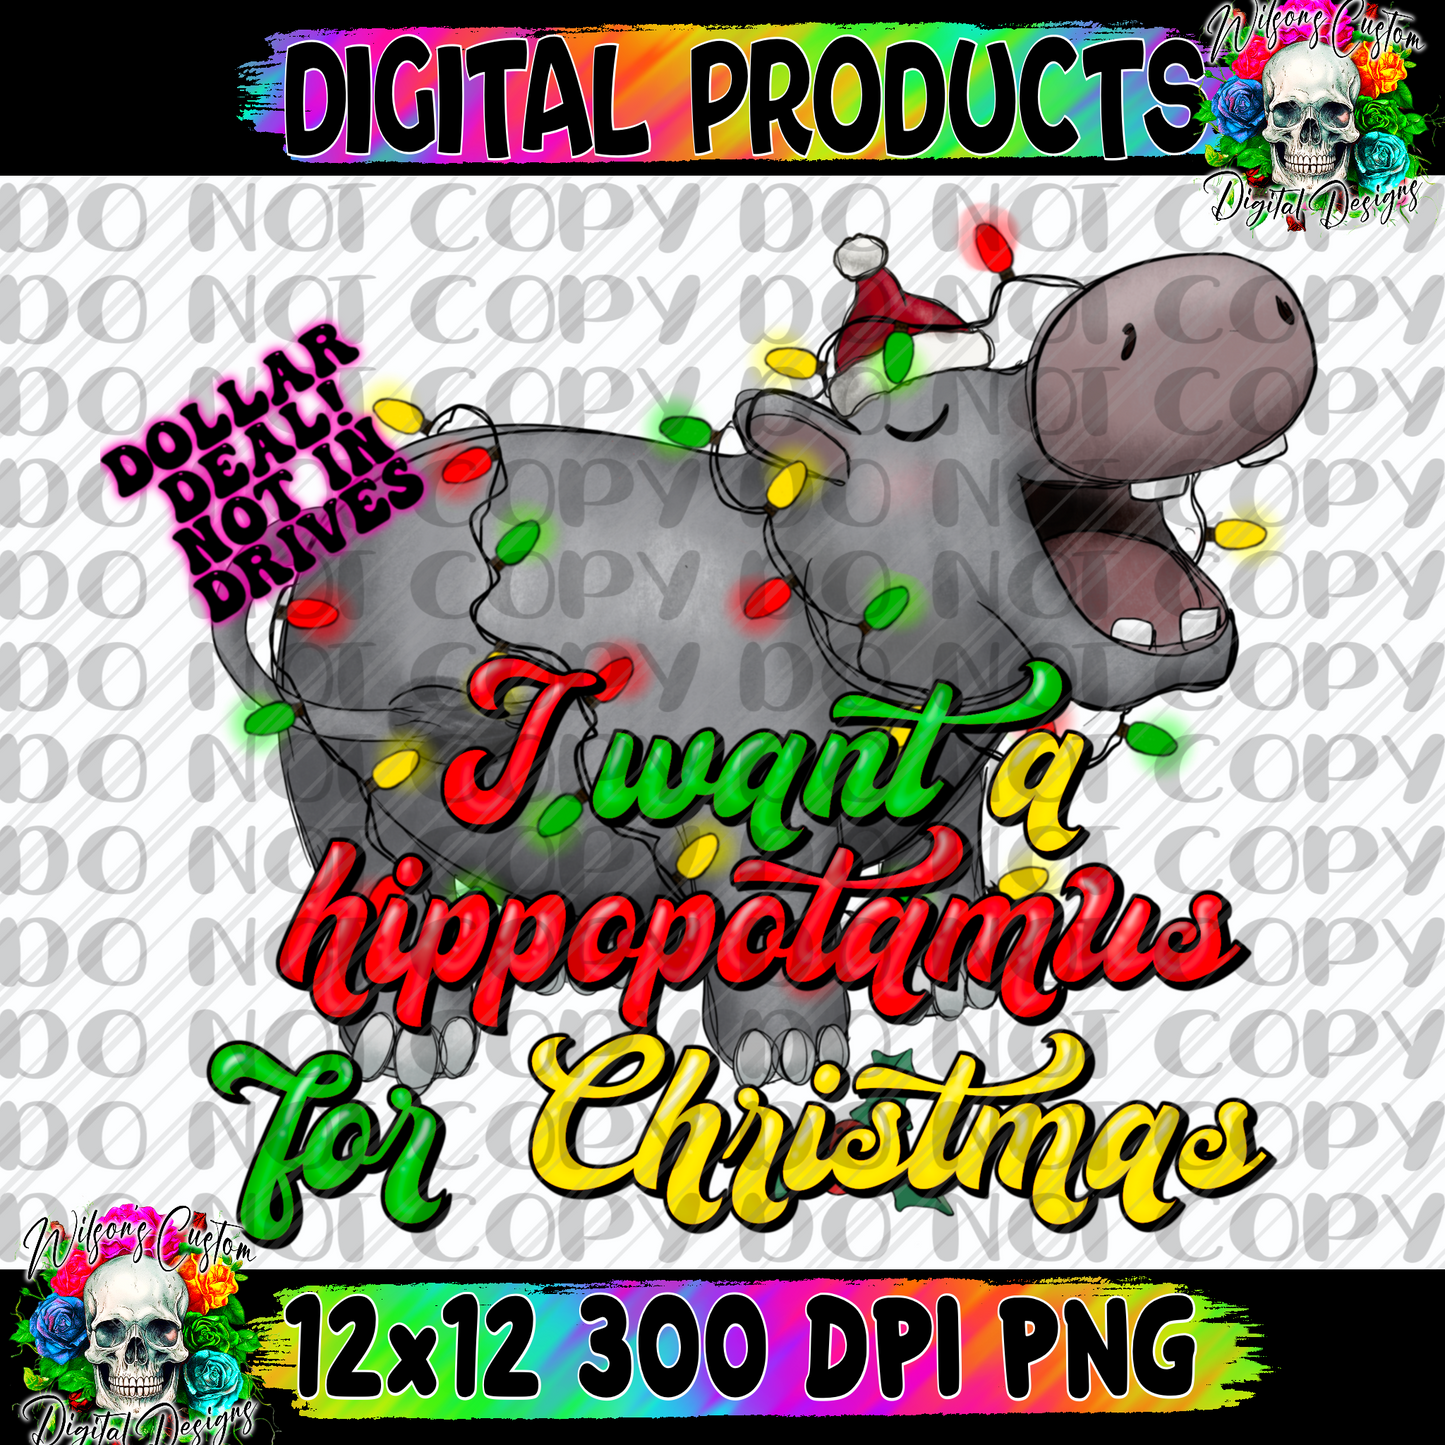 I wanna hippopotamus for Christmas